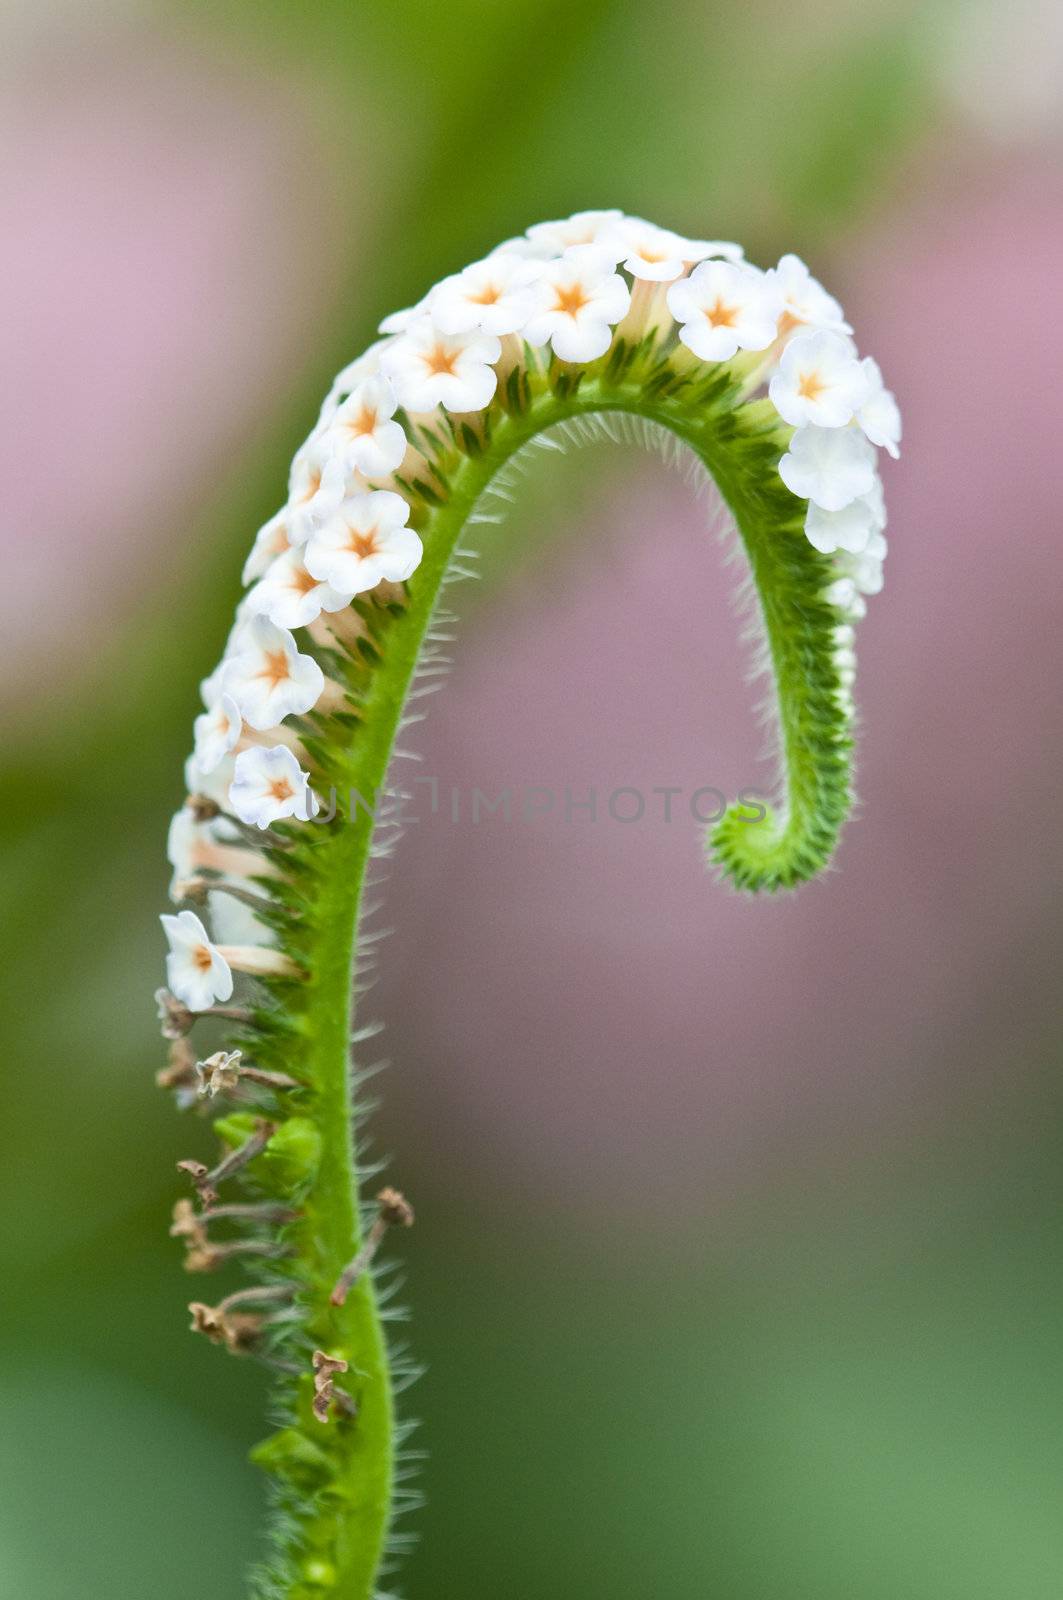 Small white flowers on curvy stem